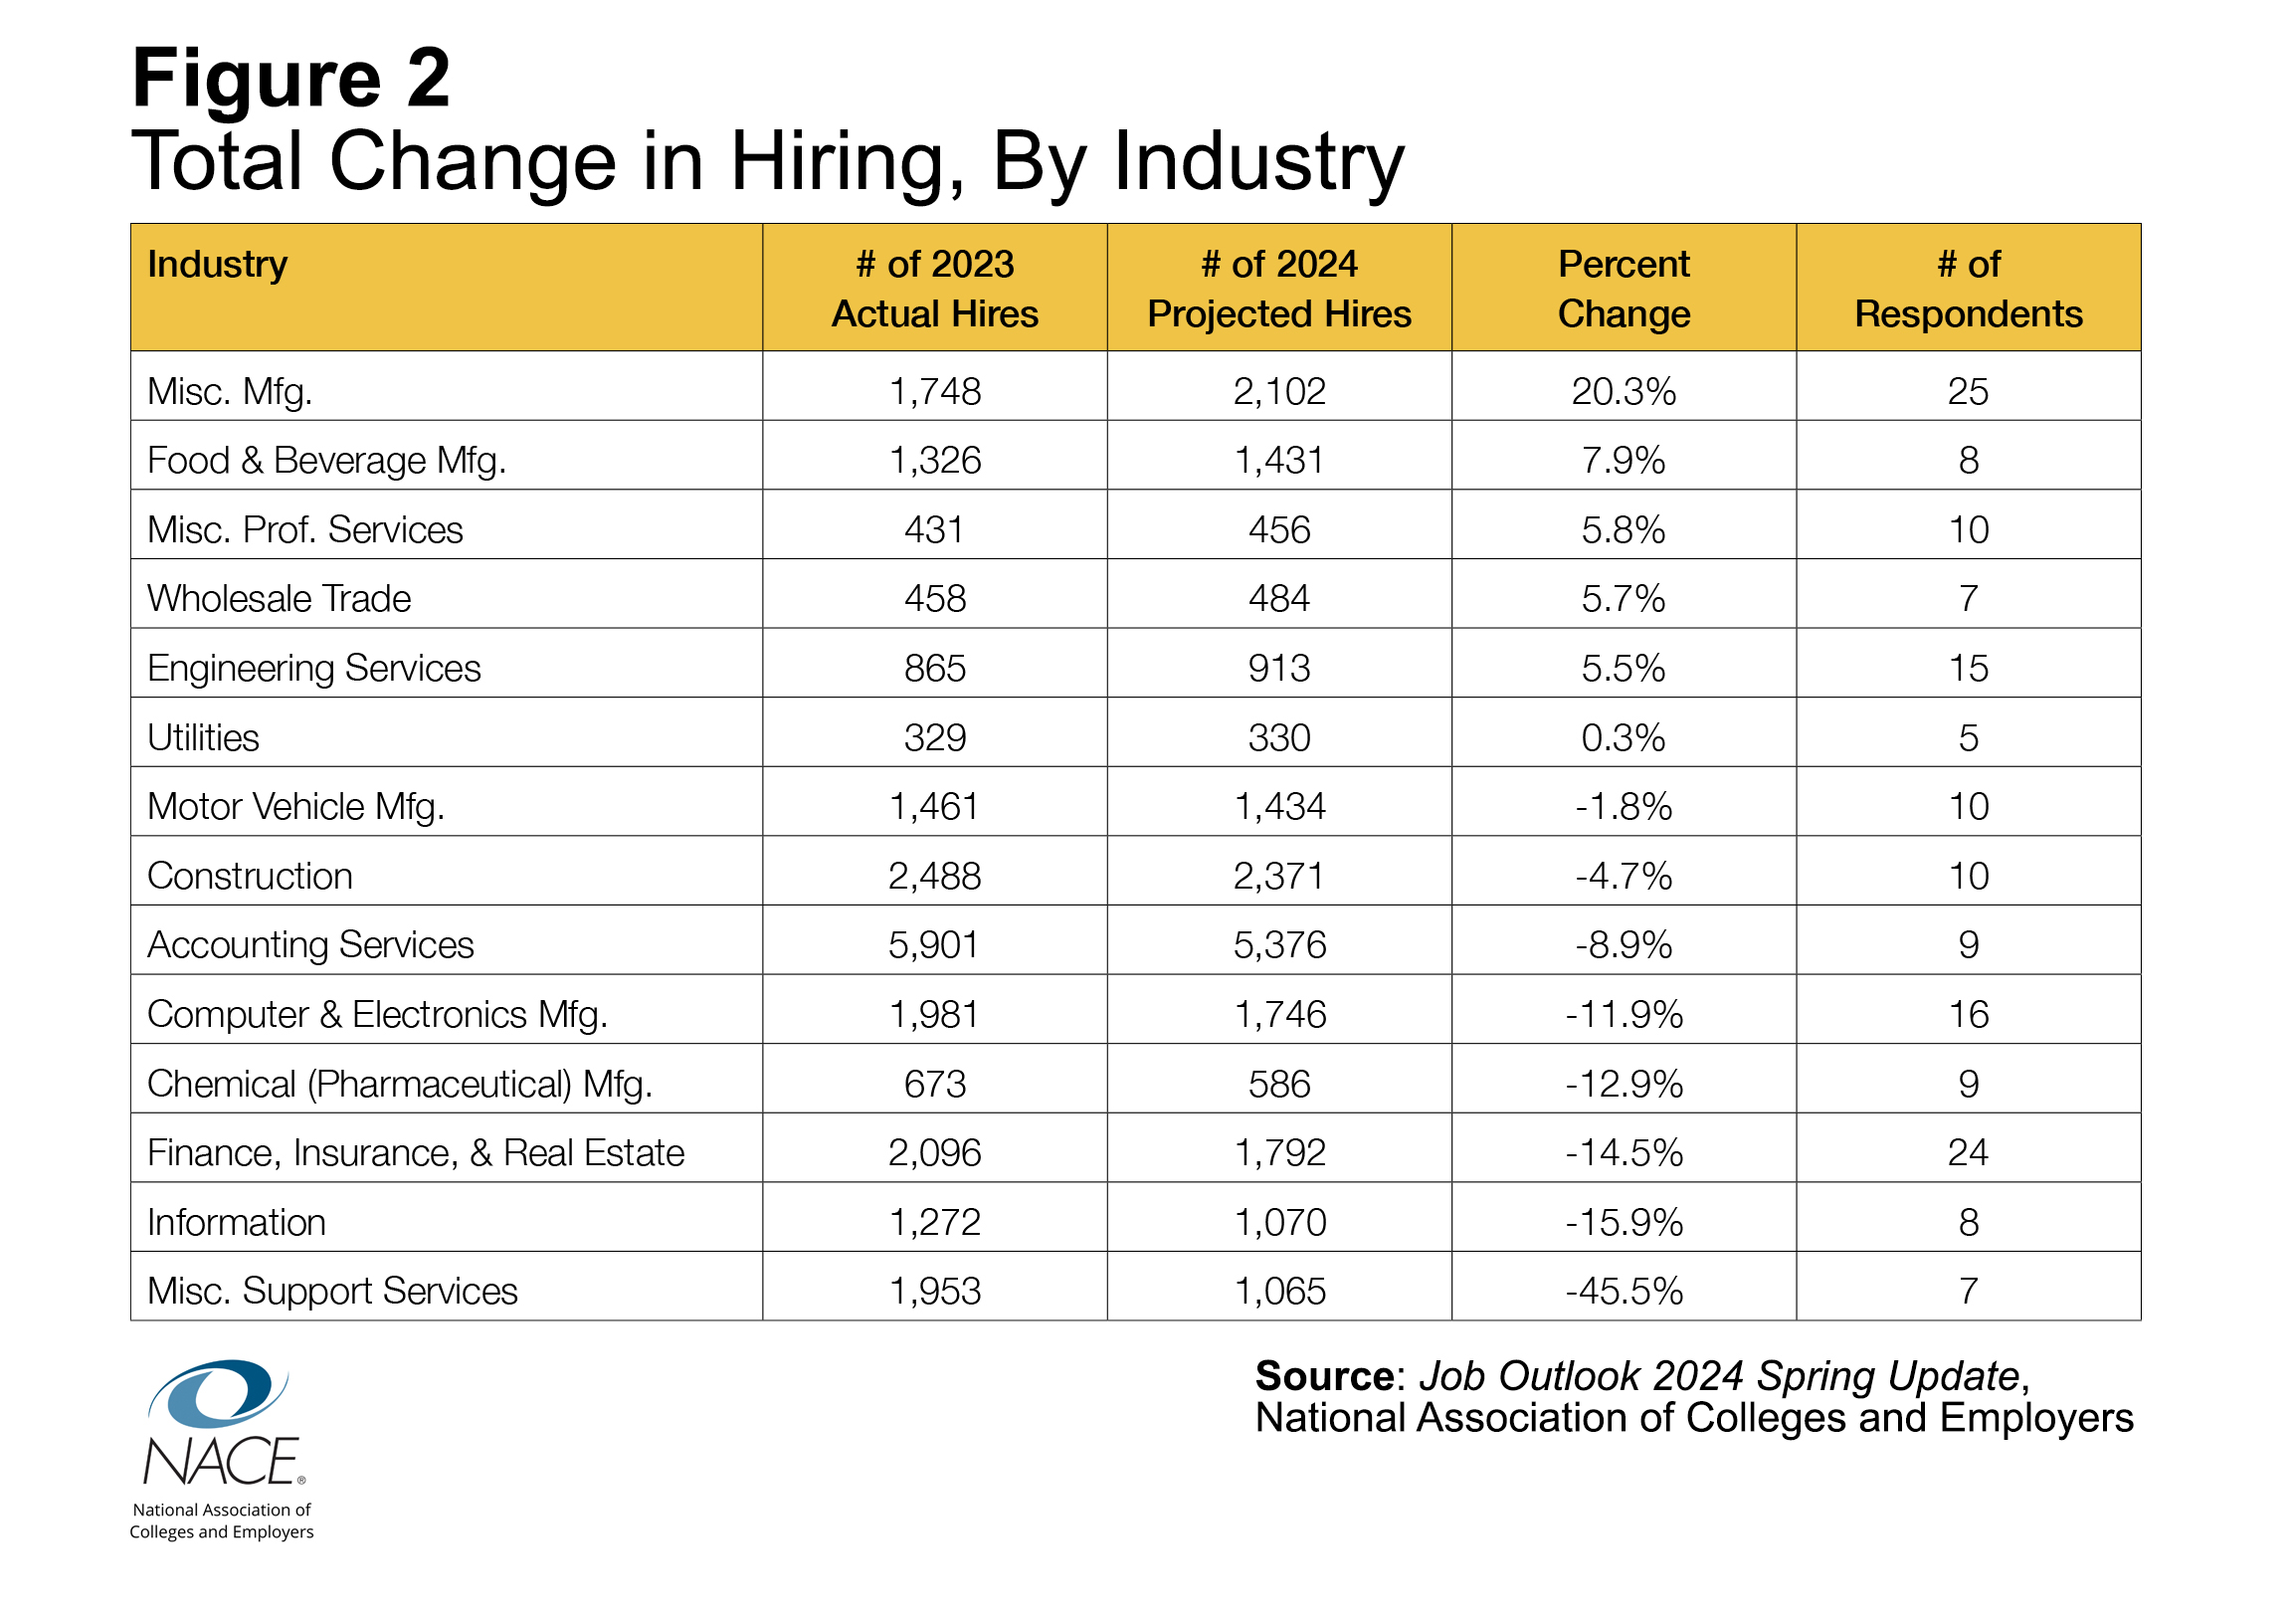 Job Outlook Spring Update 2024: Change in hiring, by industry